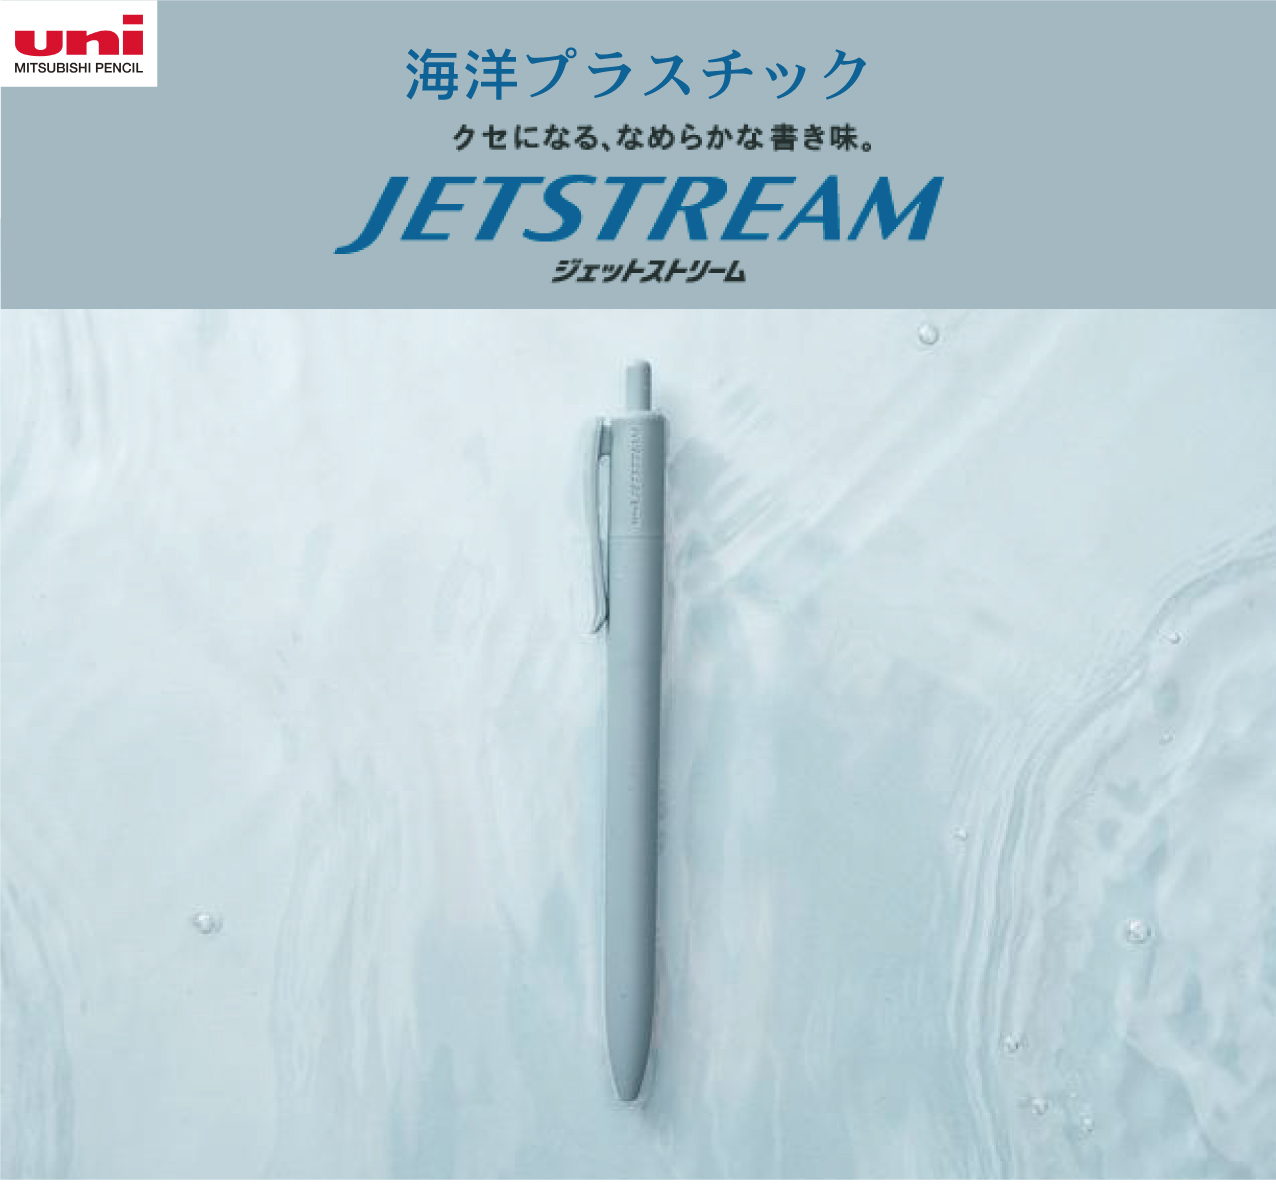 “jetstream”